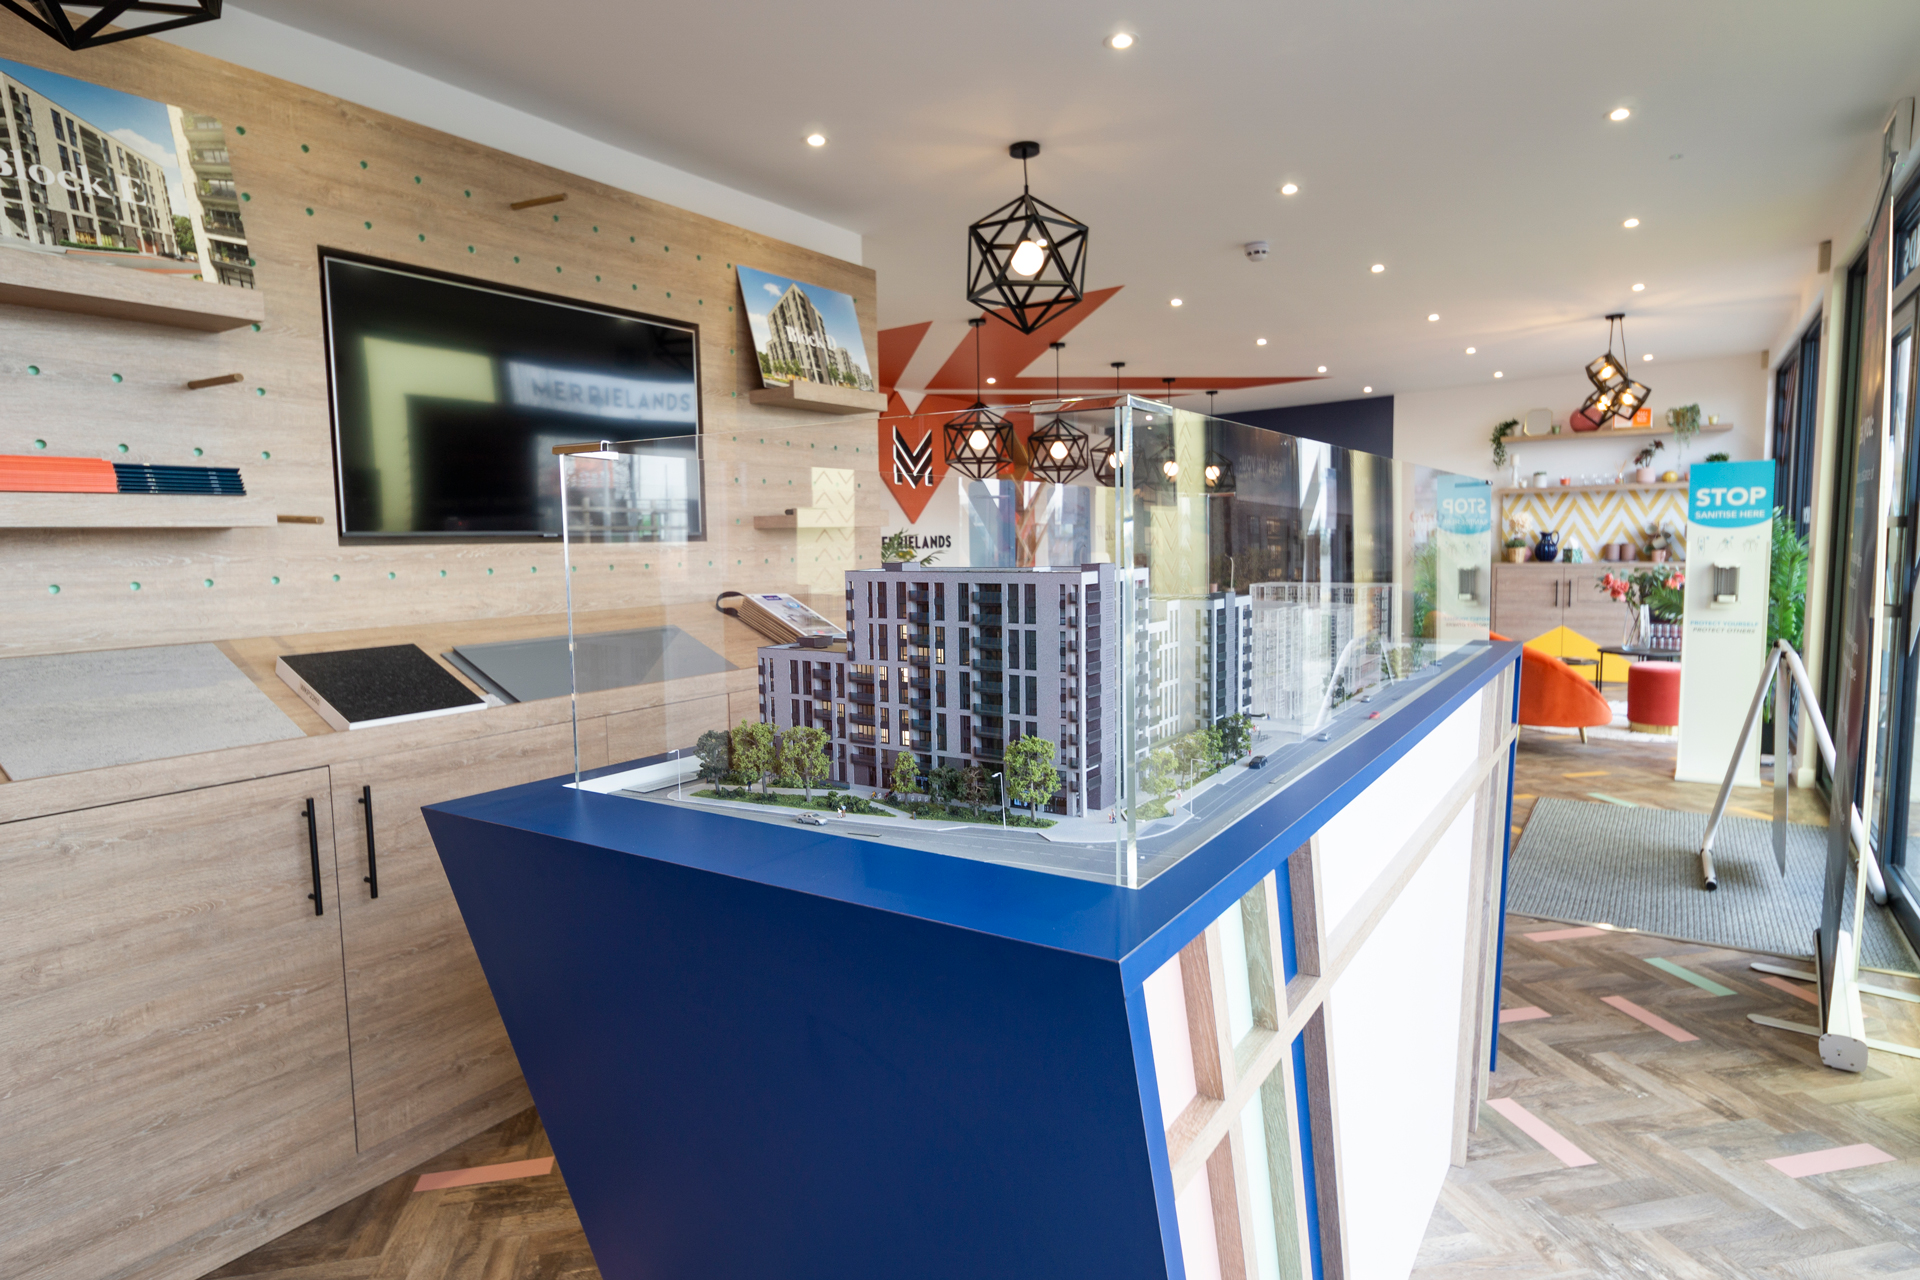 3D model of a housing development in a glass case